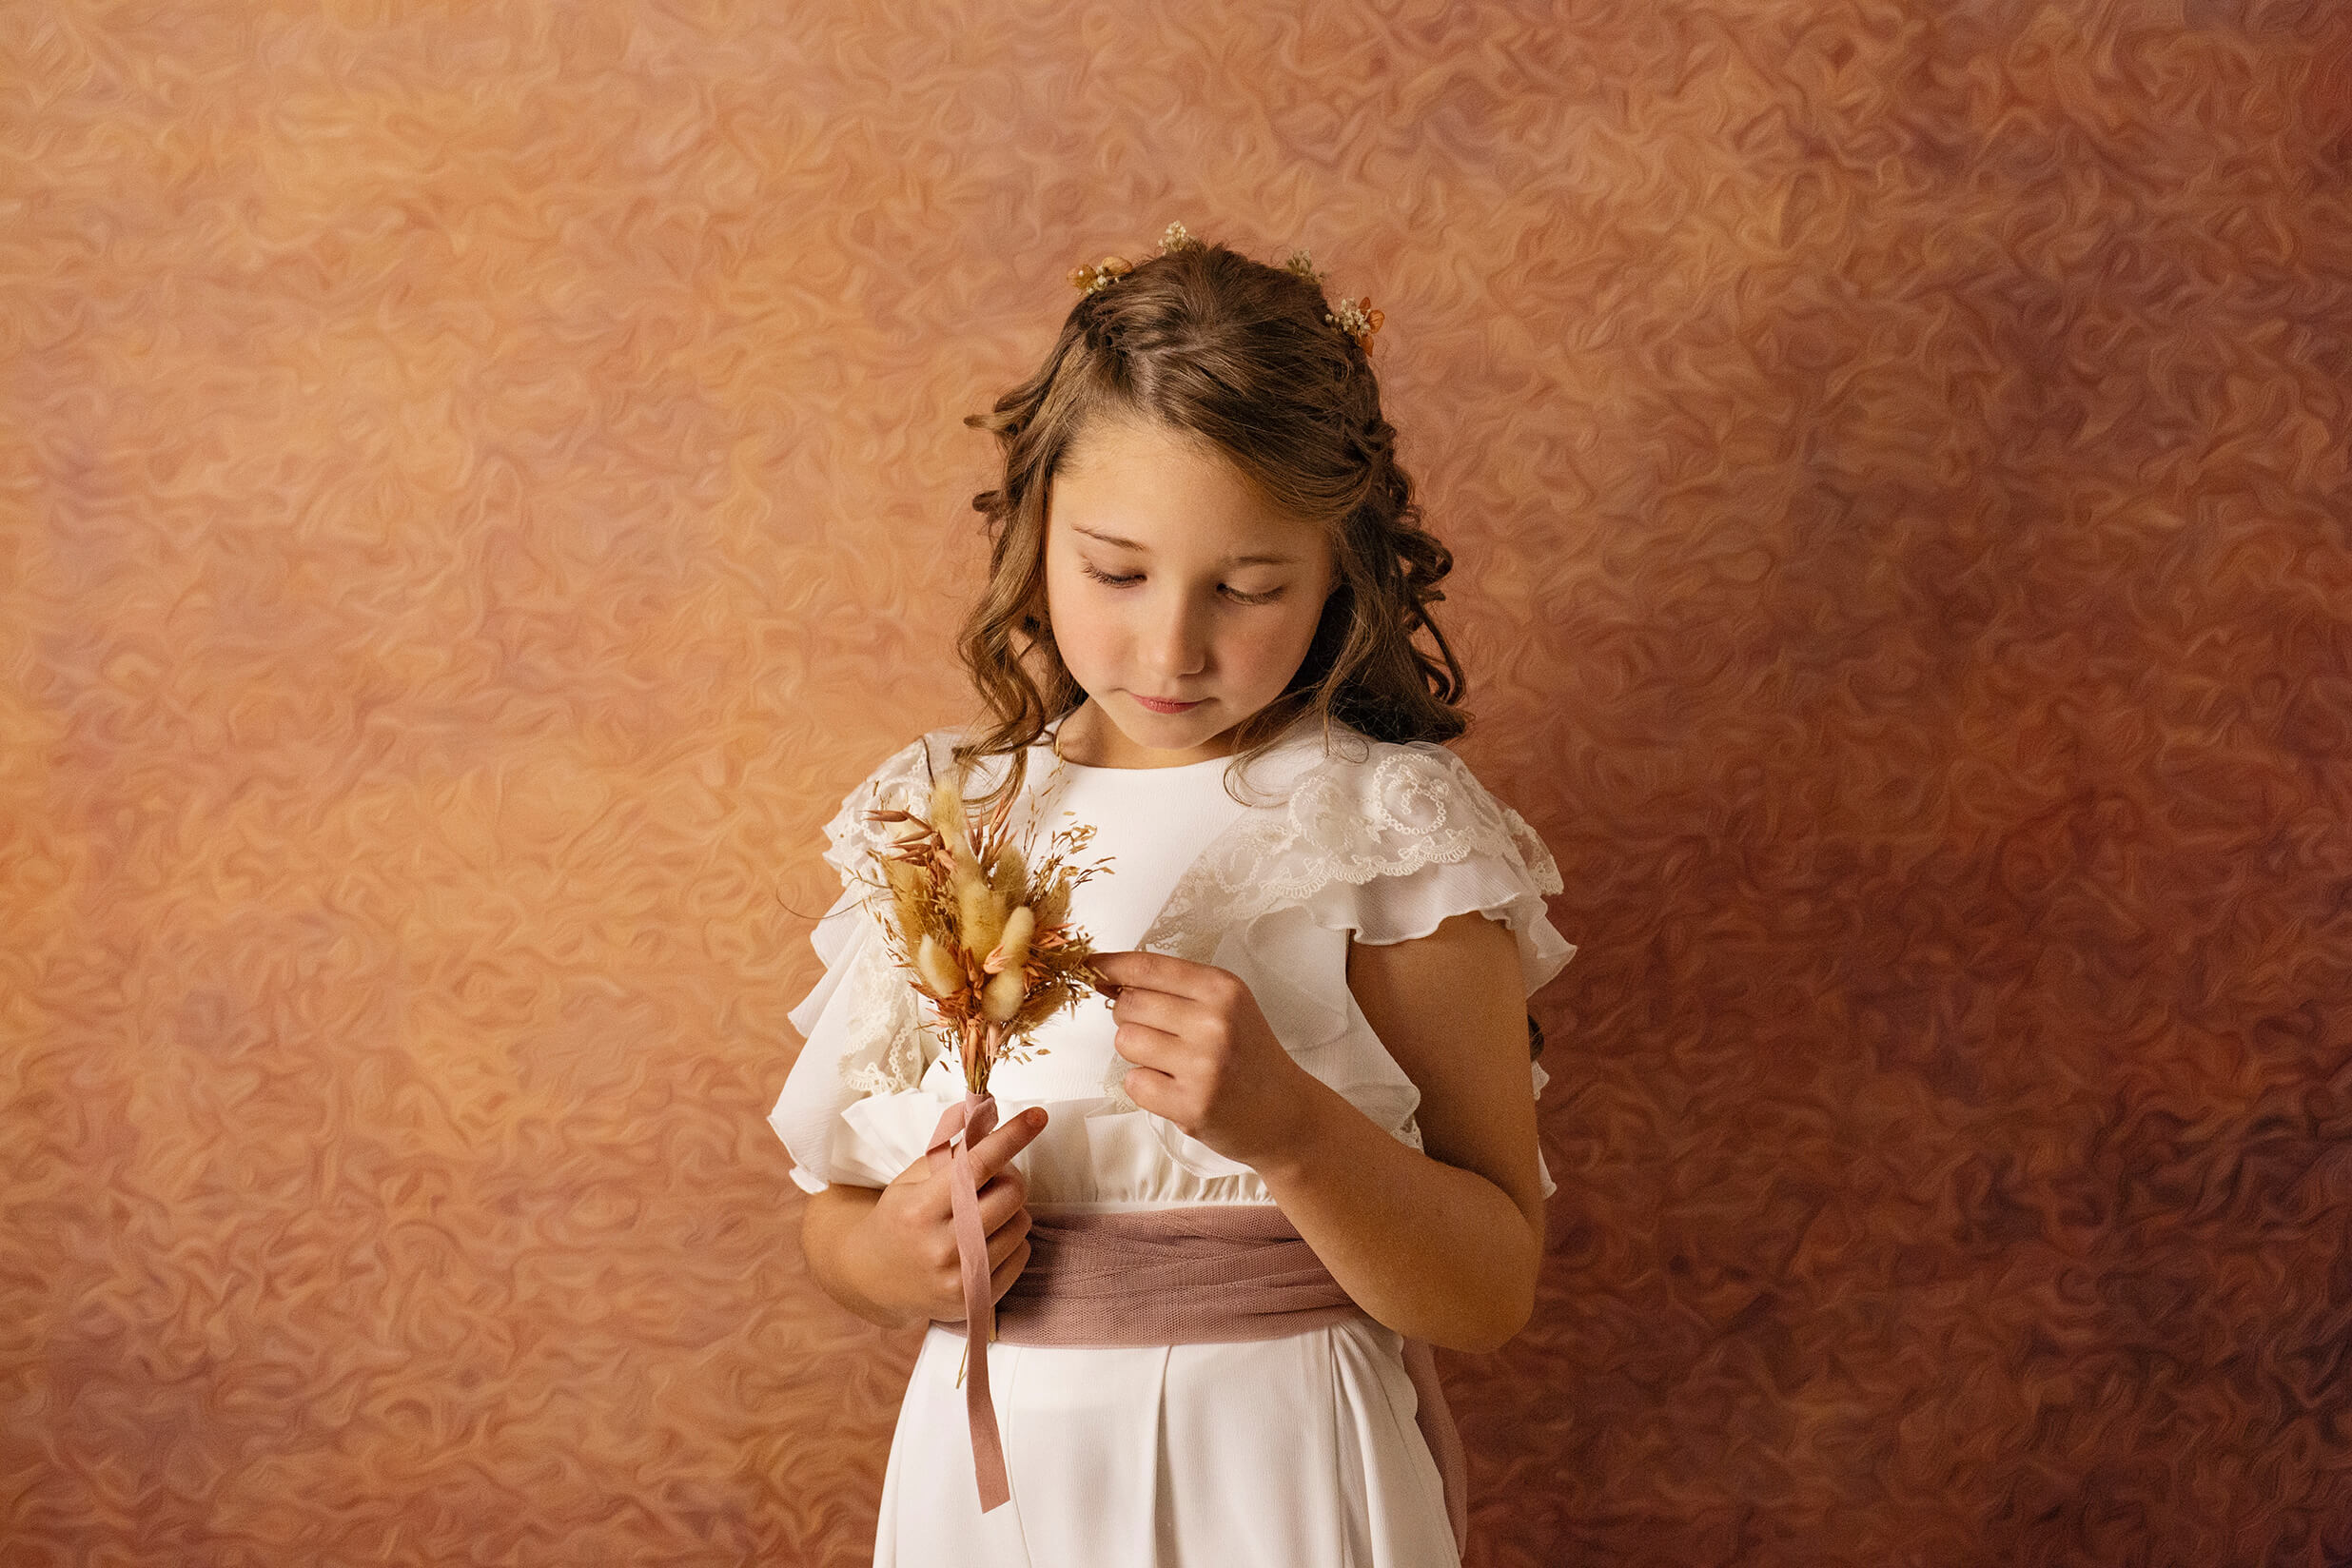 Fotografía de comunión en estudio, niña de comunión cogiendo un ramo de flores 